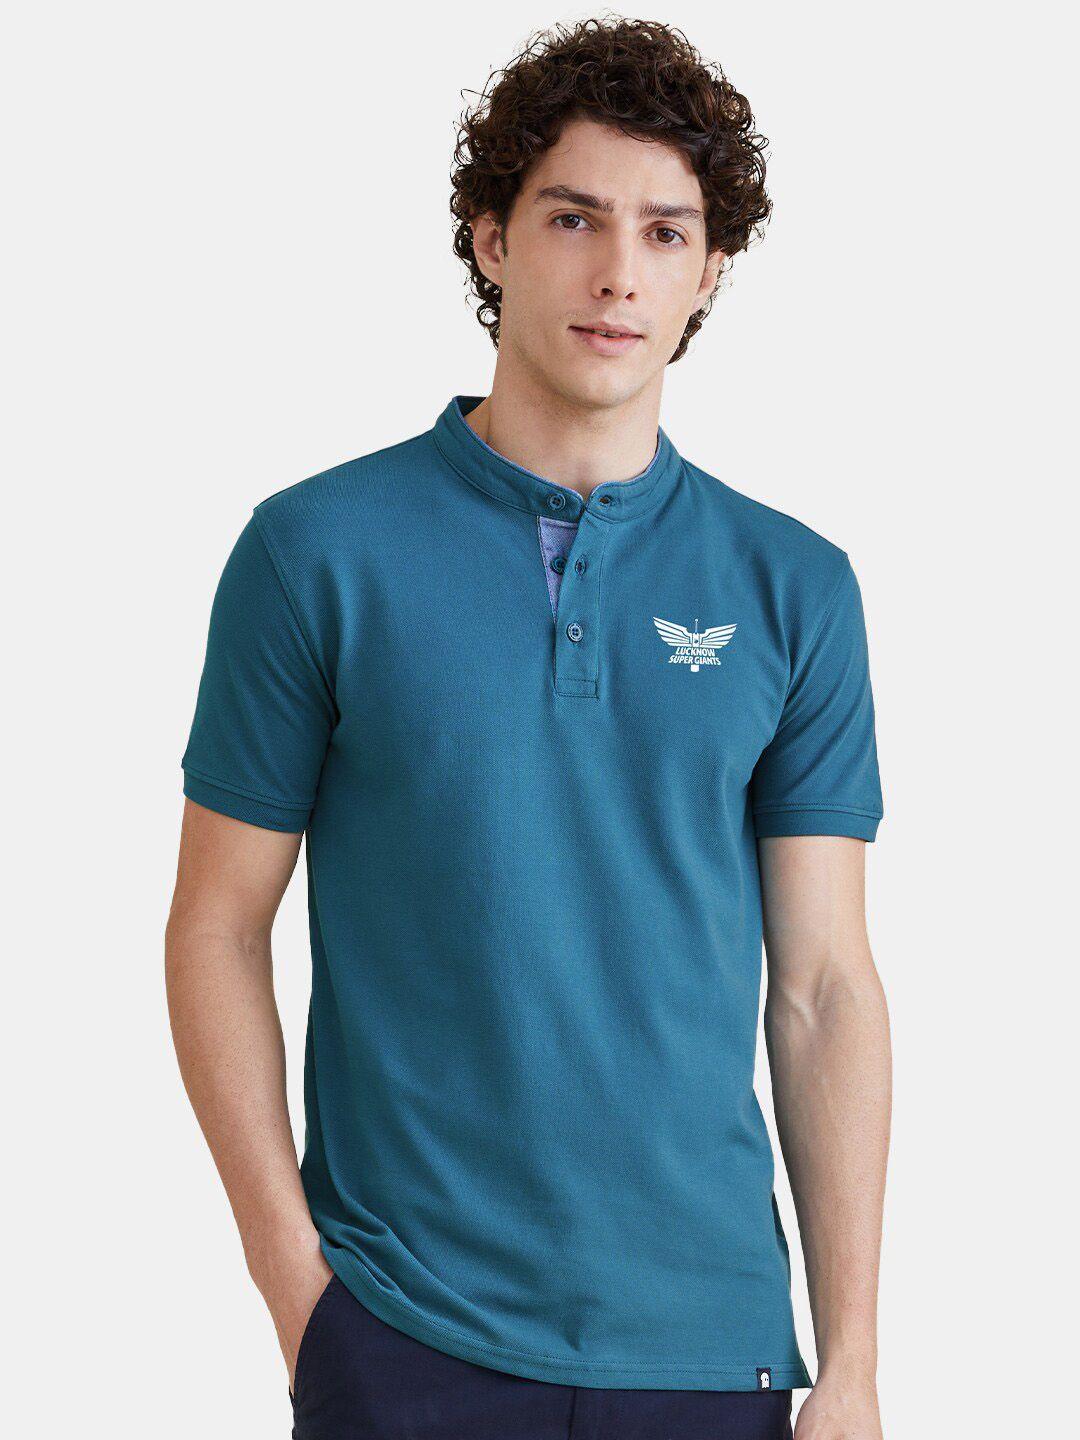 the souled store teal blue mandarin collar t-shirt